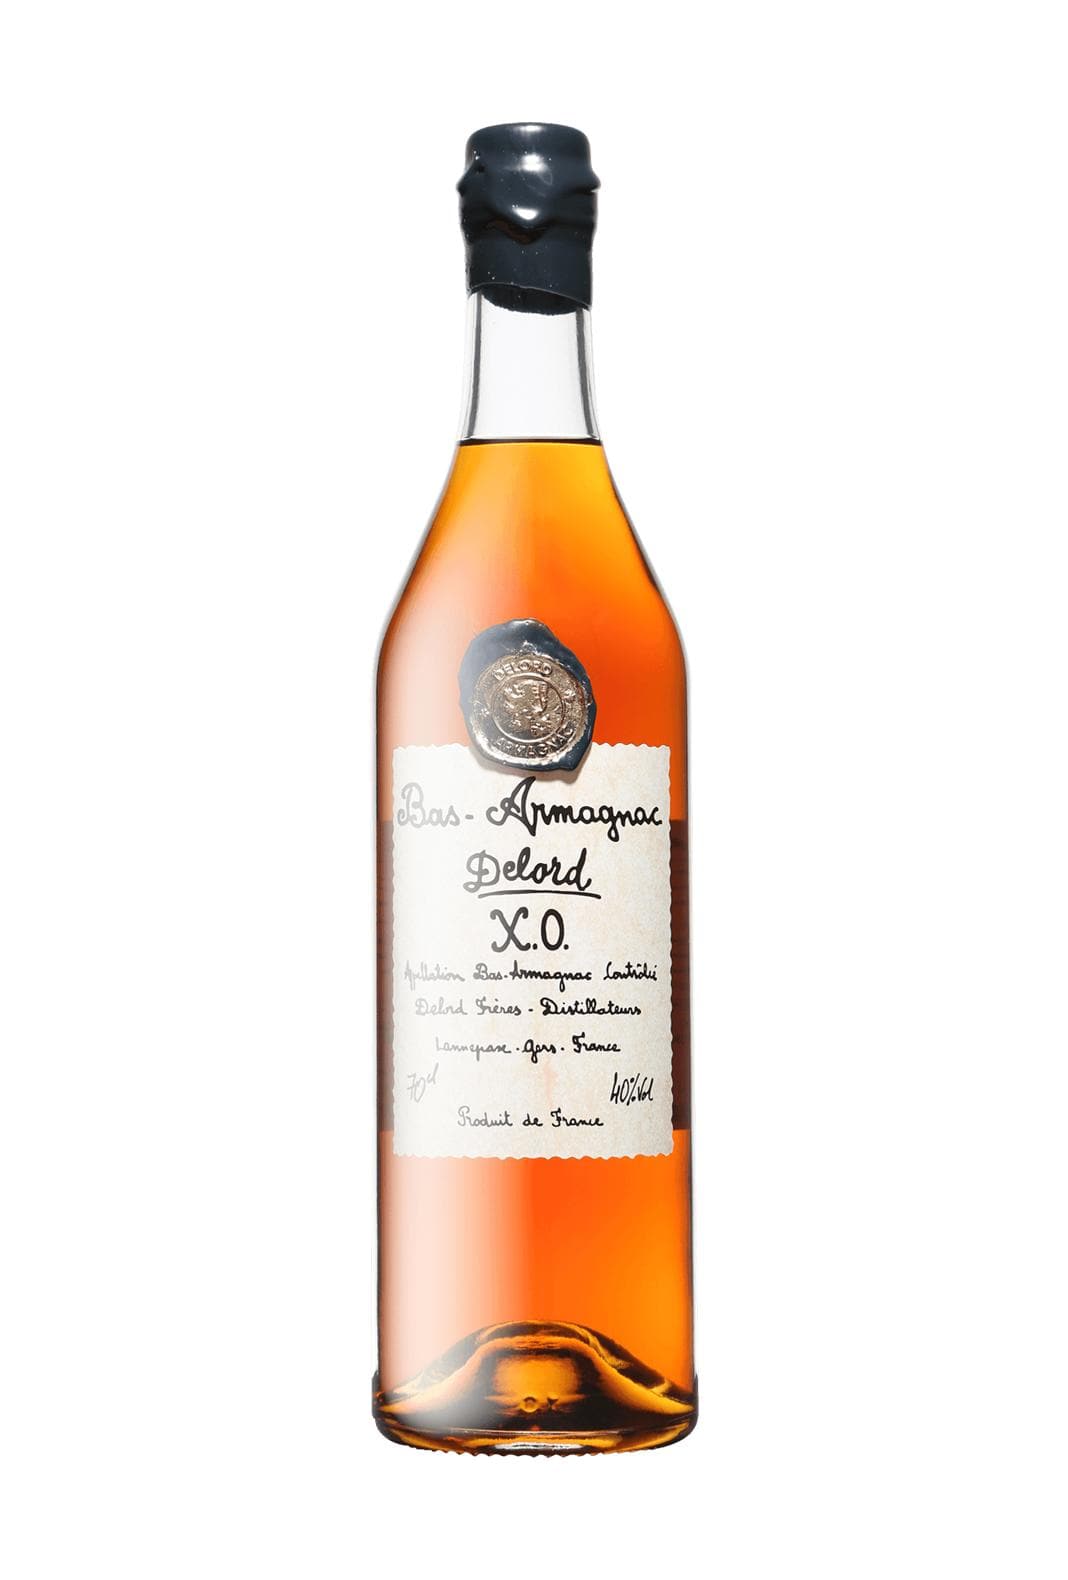 Delord XO 10 years Bas Armagnac 40% 700ml | Brandy | Shop online at Spirits of France